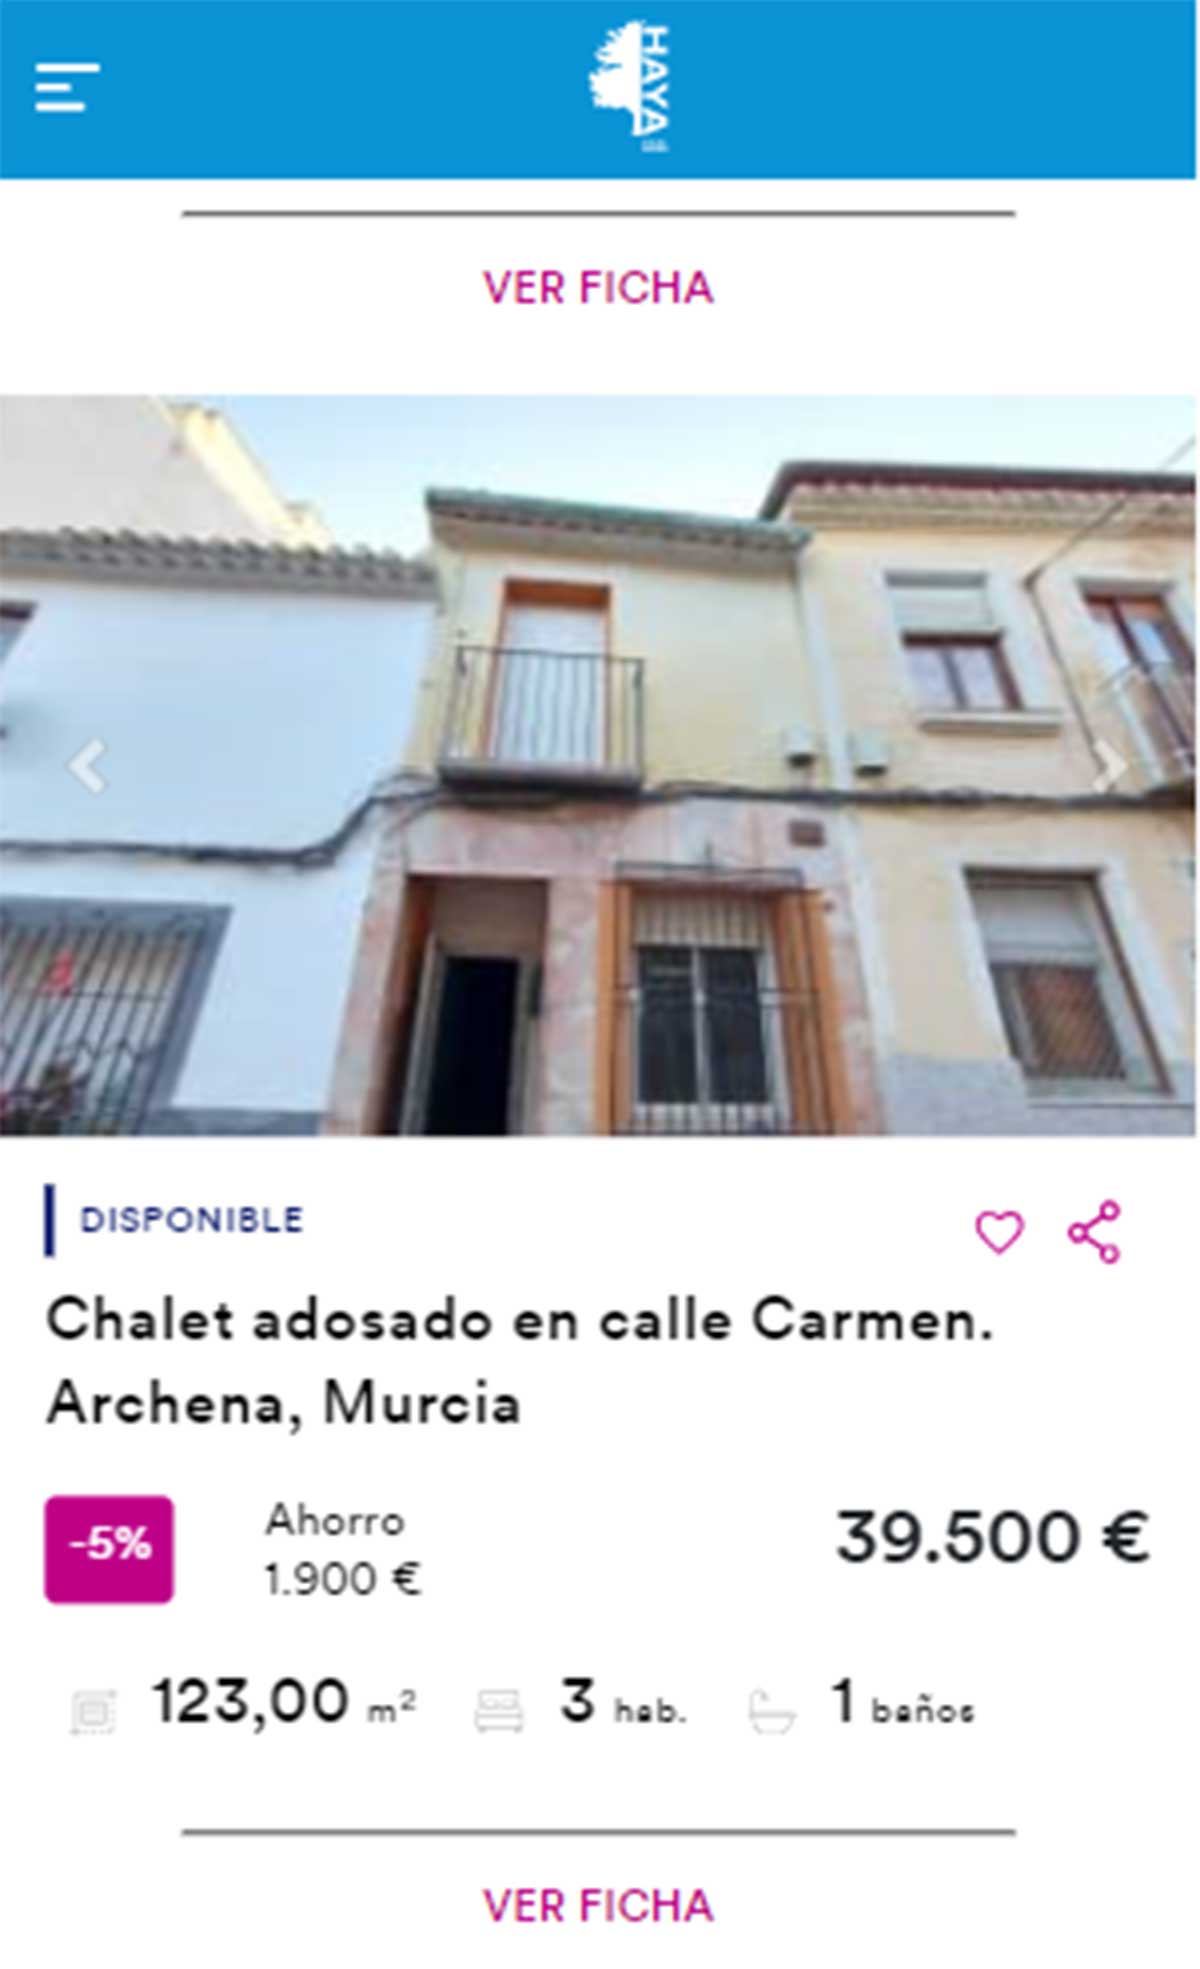 Chalet adosado por 39.500 euros